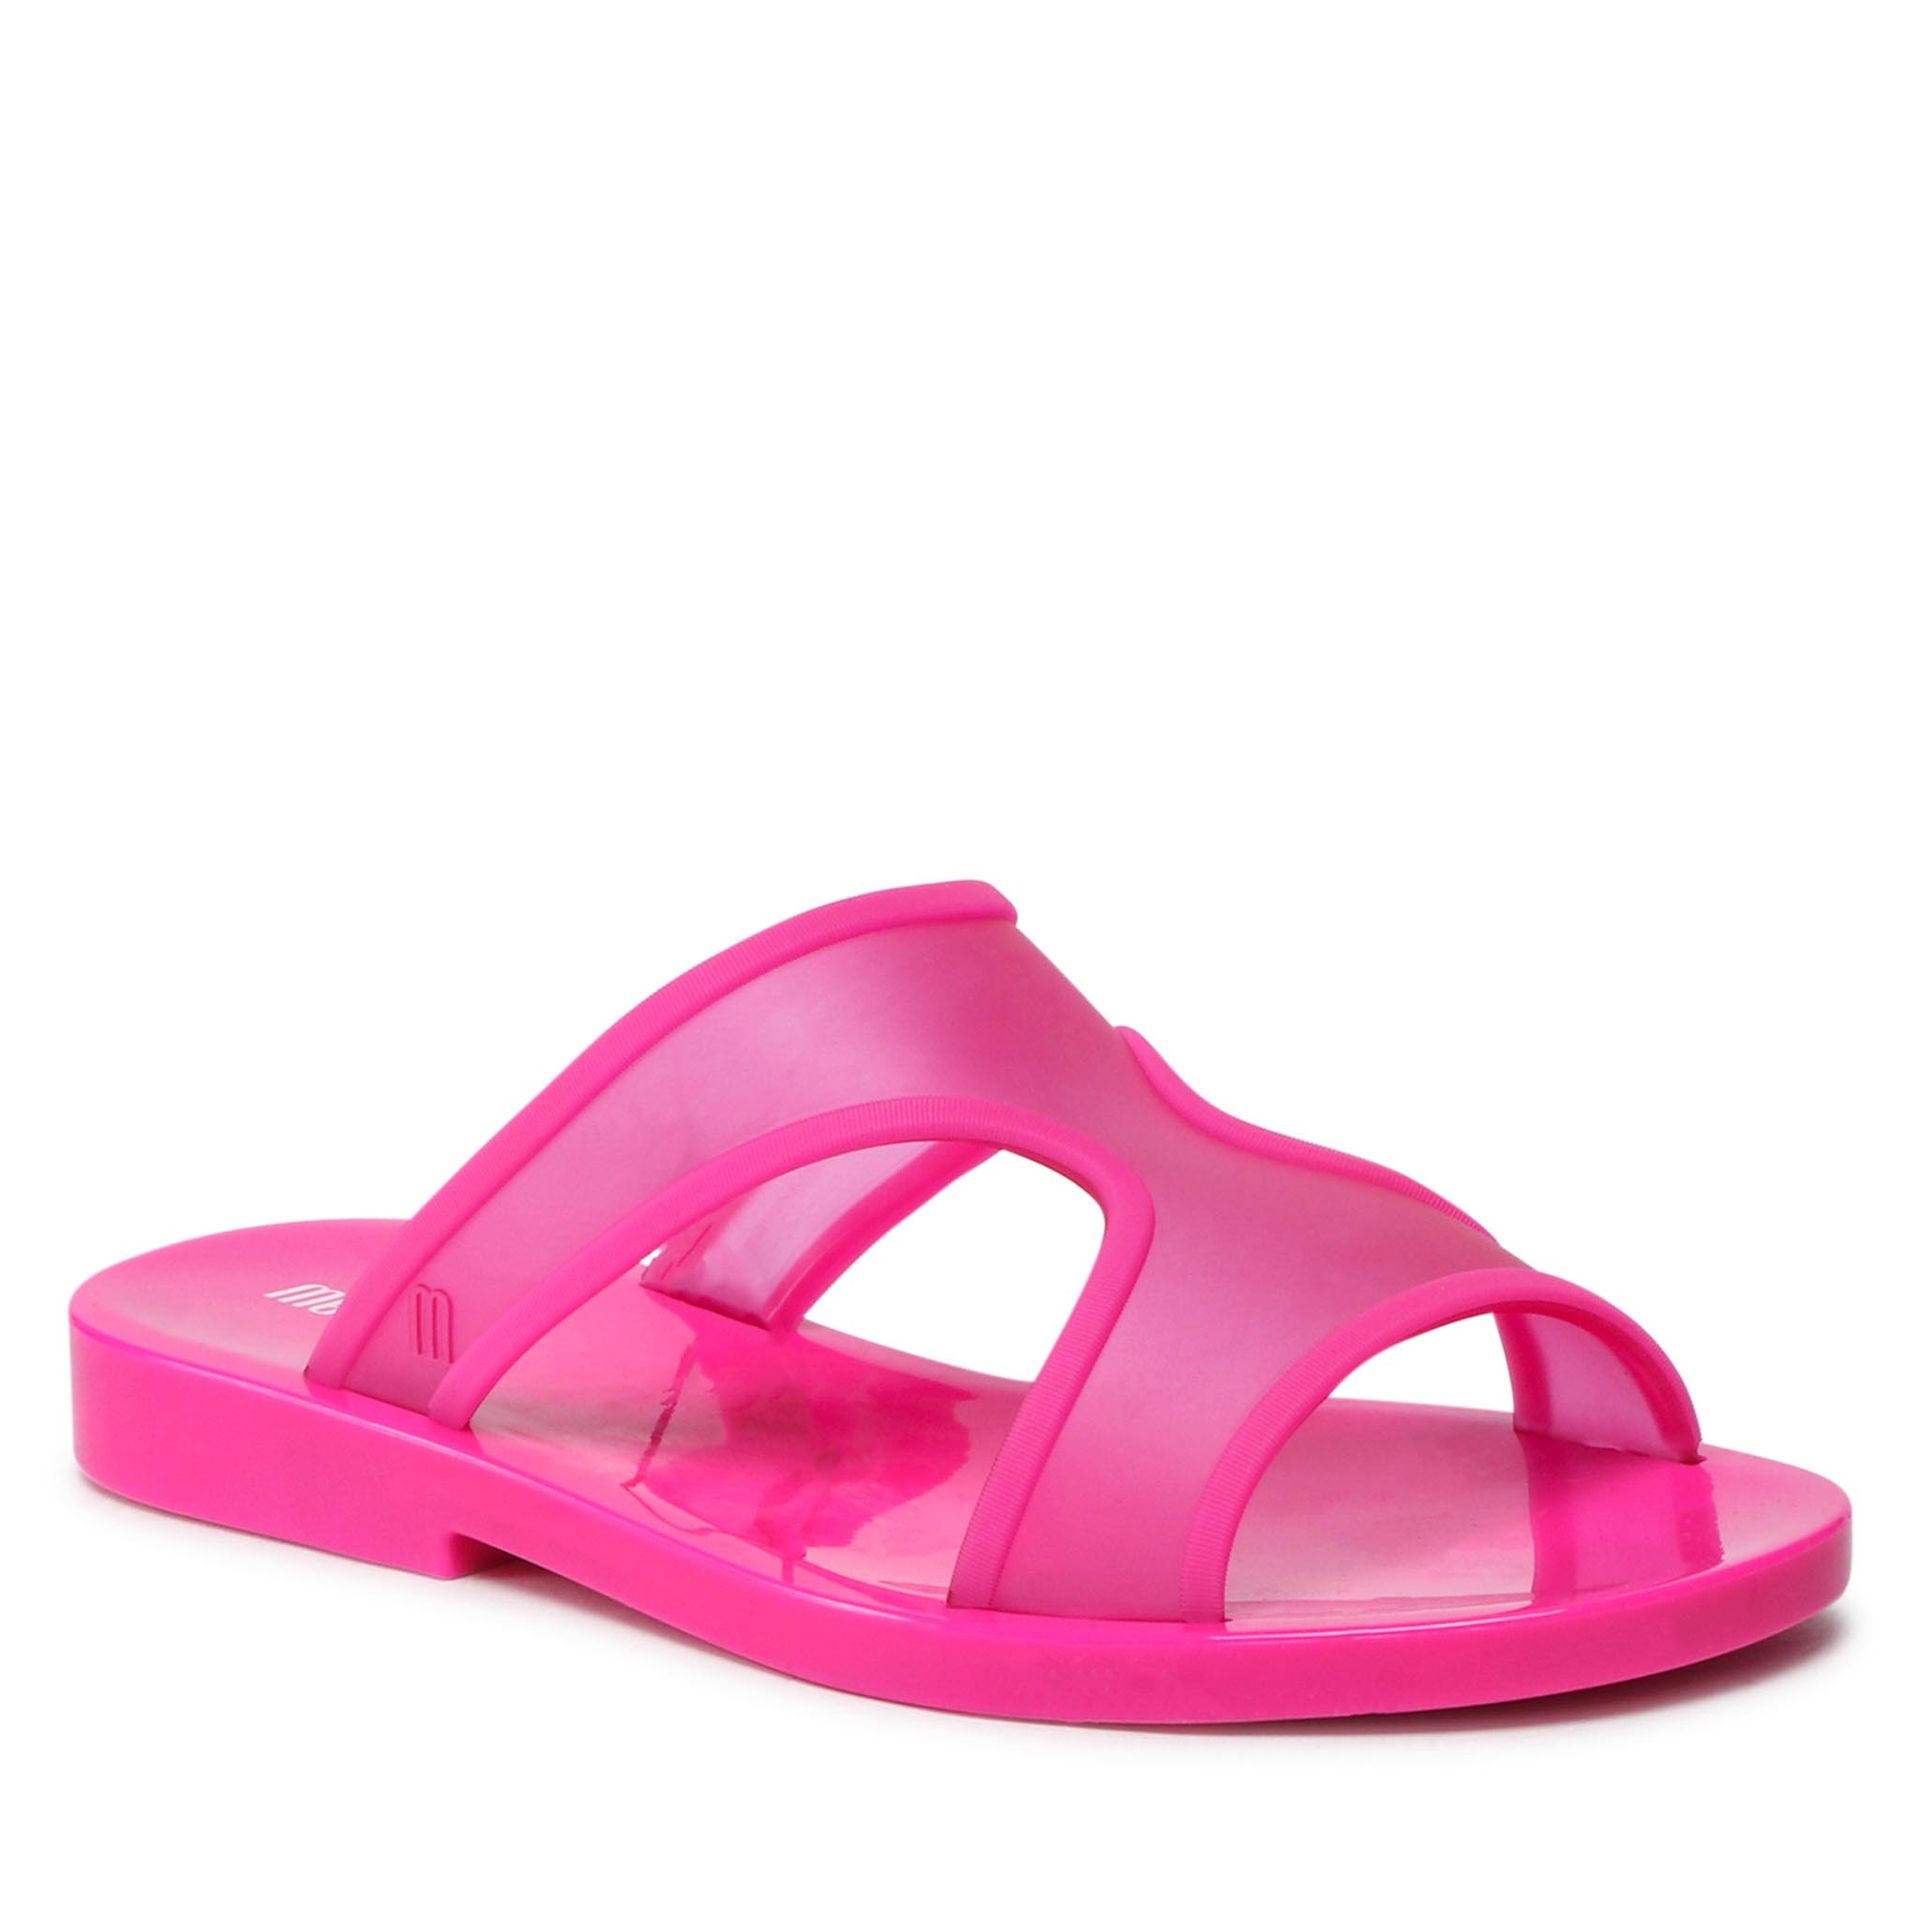 Melissa Klapki Bikini Slide Ad 33517 Neon Pink 53802